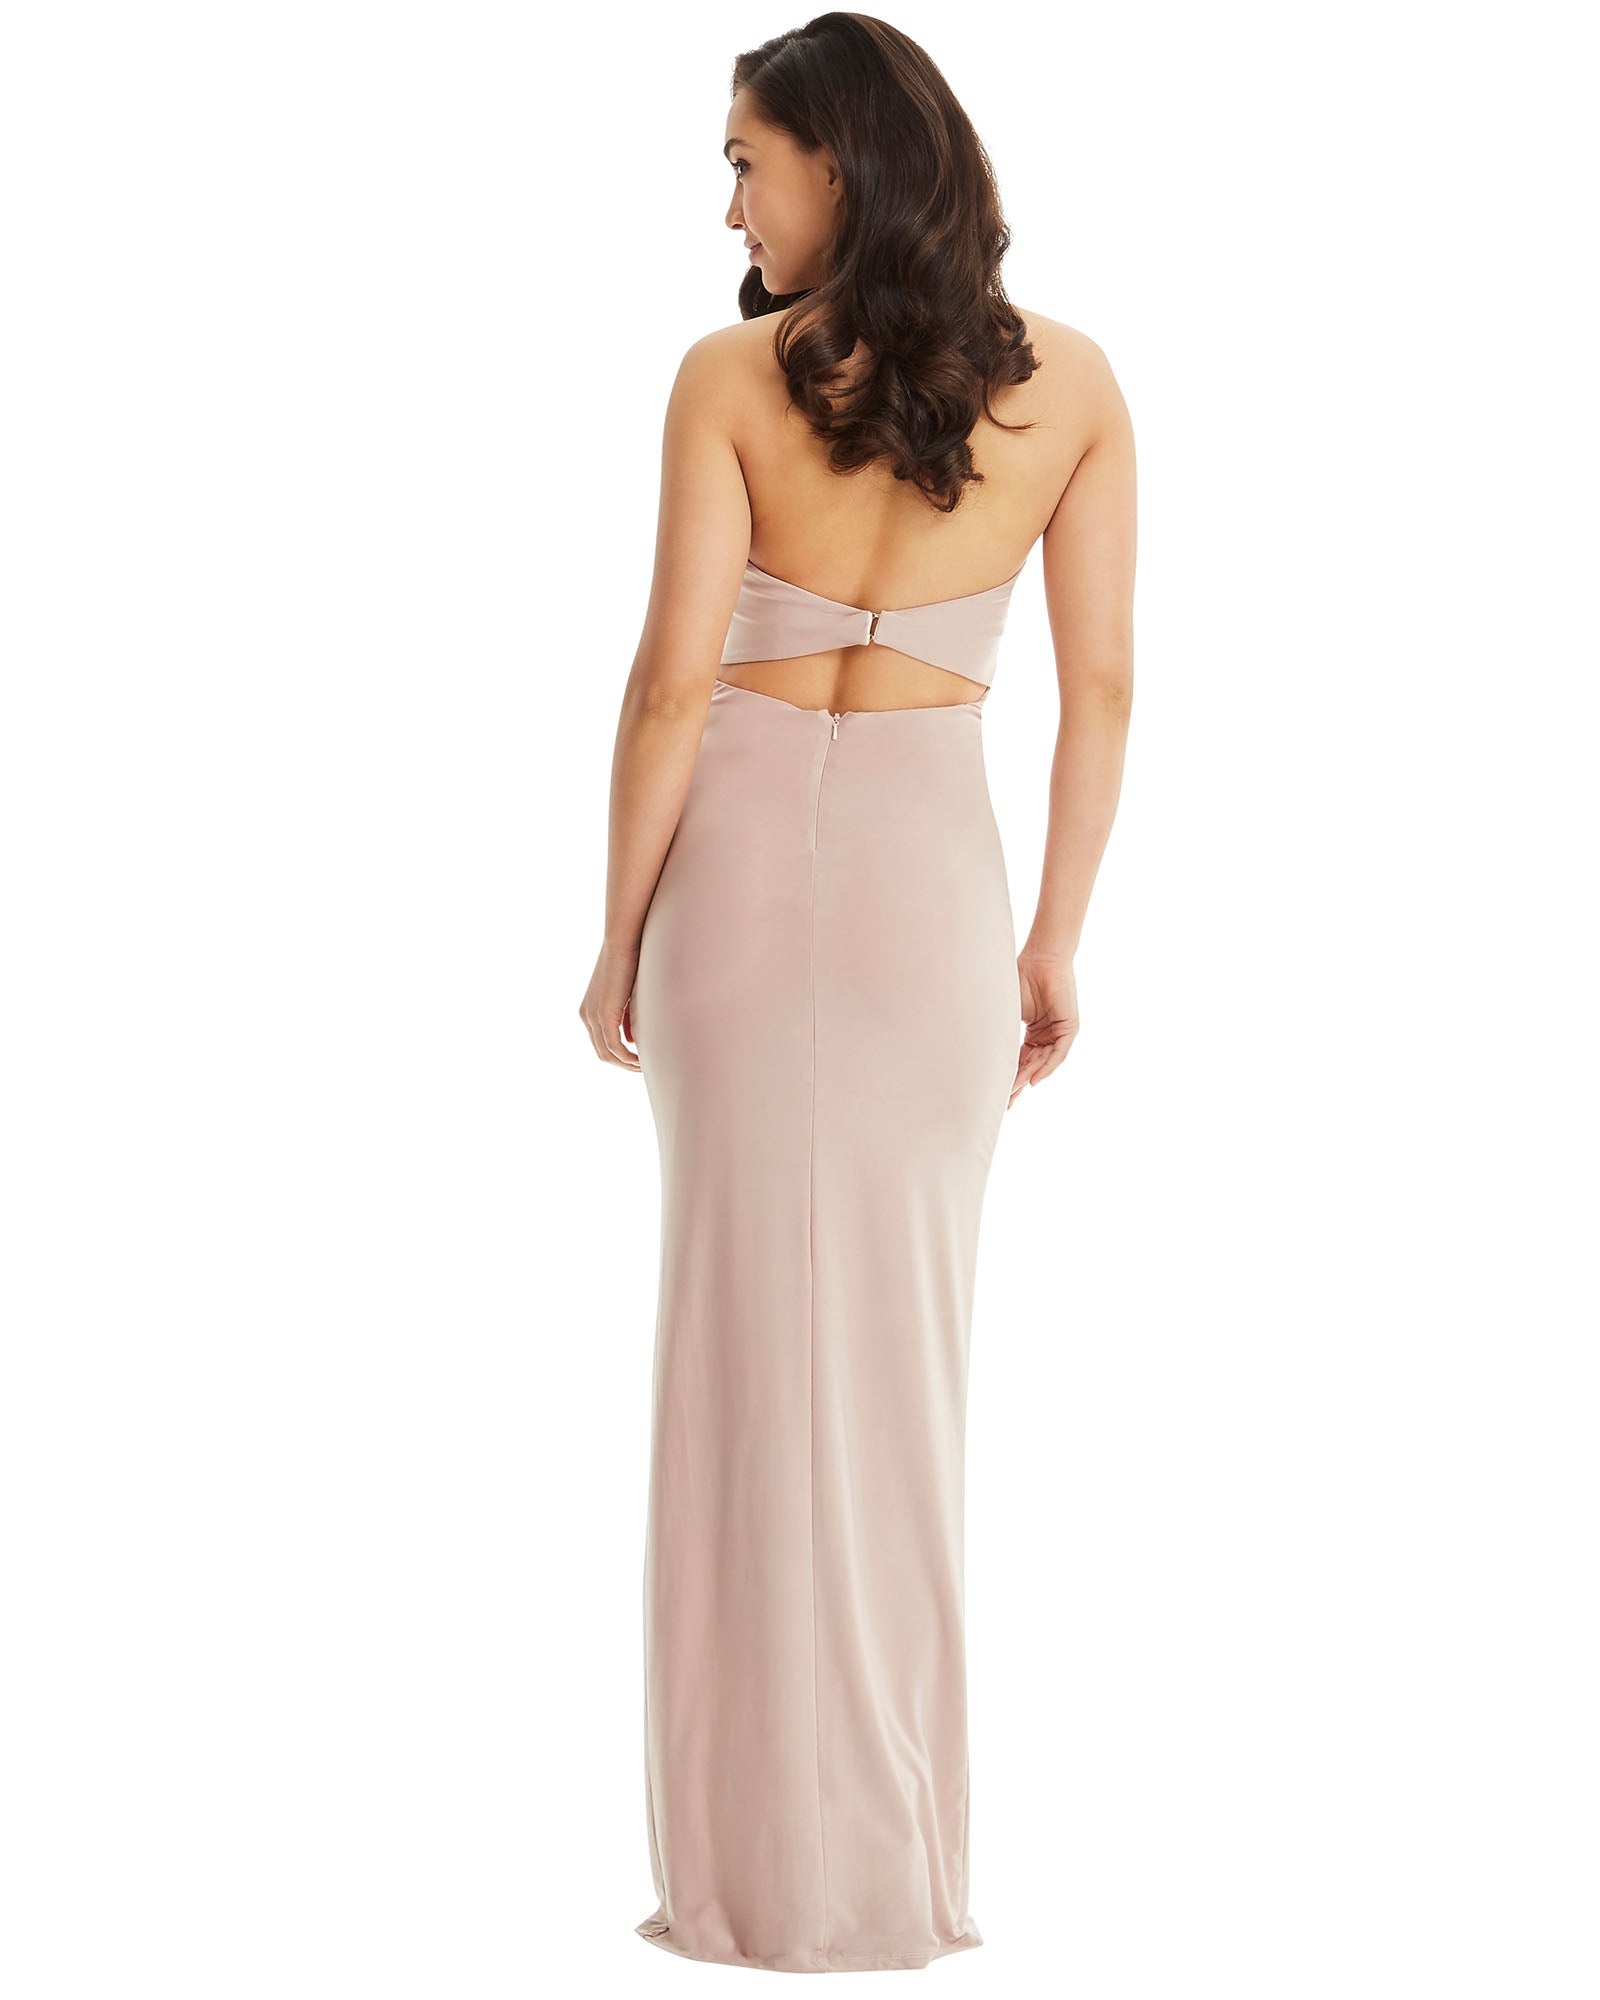 SKIVA strapless evening dress long latte neutral split gown open back sheath stretch fabric